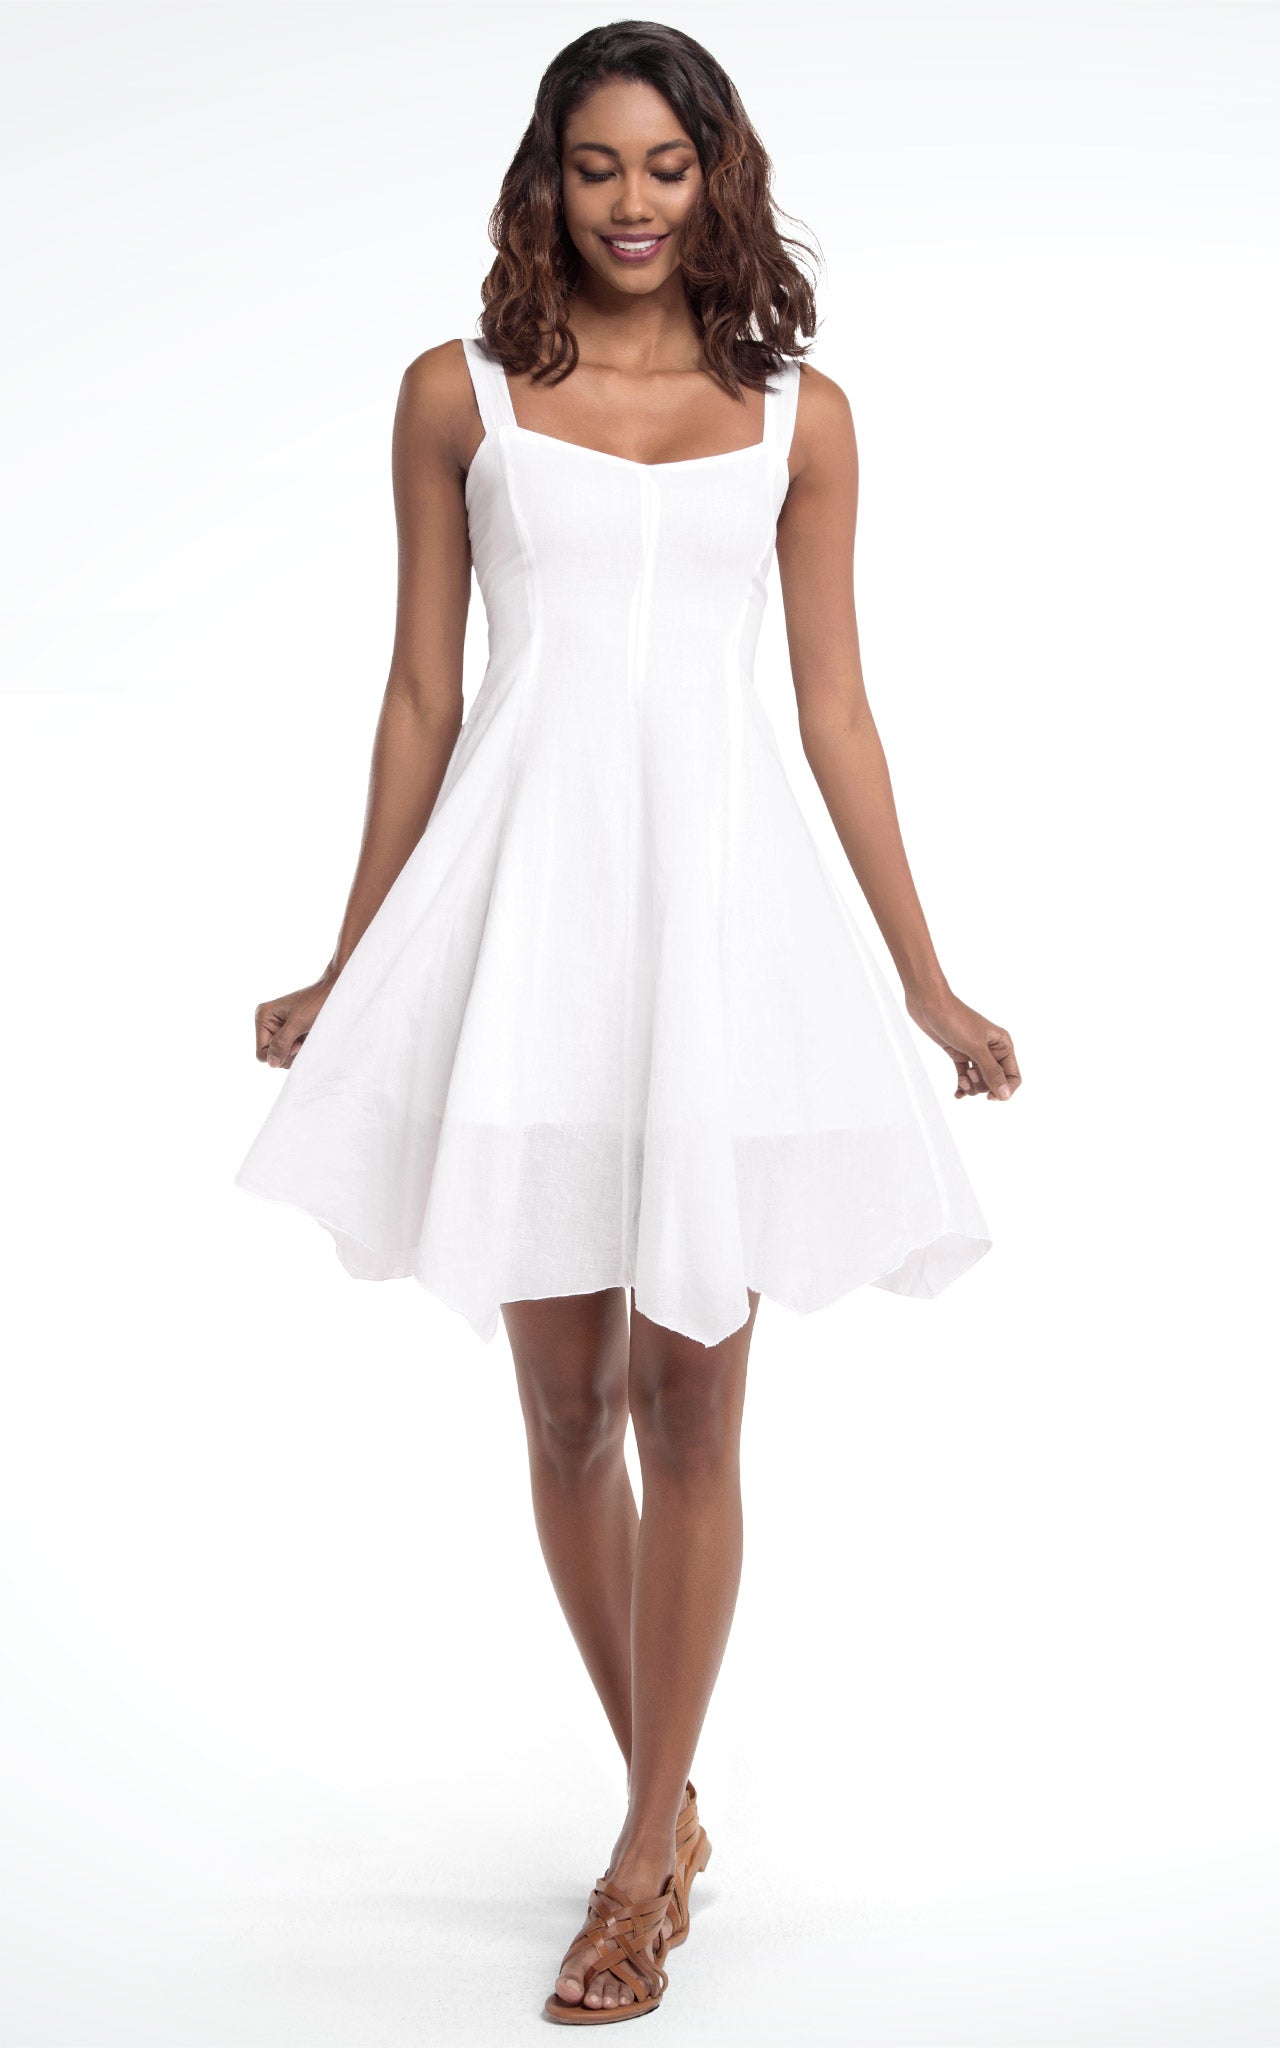 sleeveless white dress